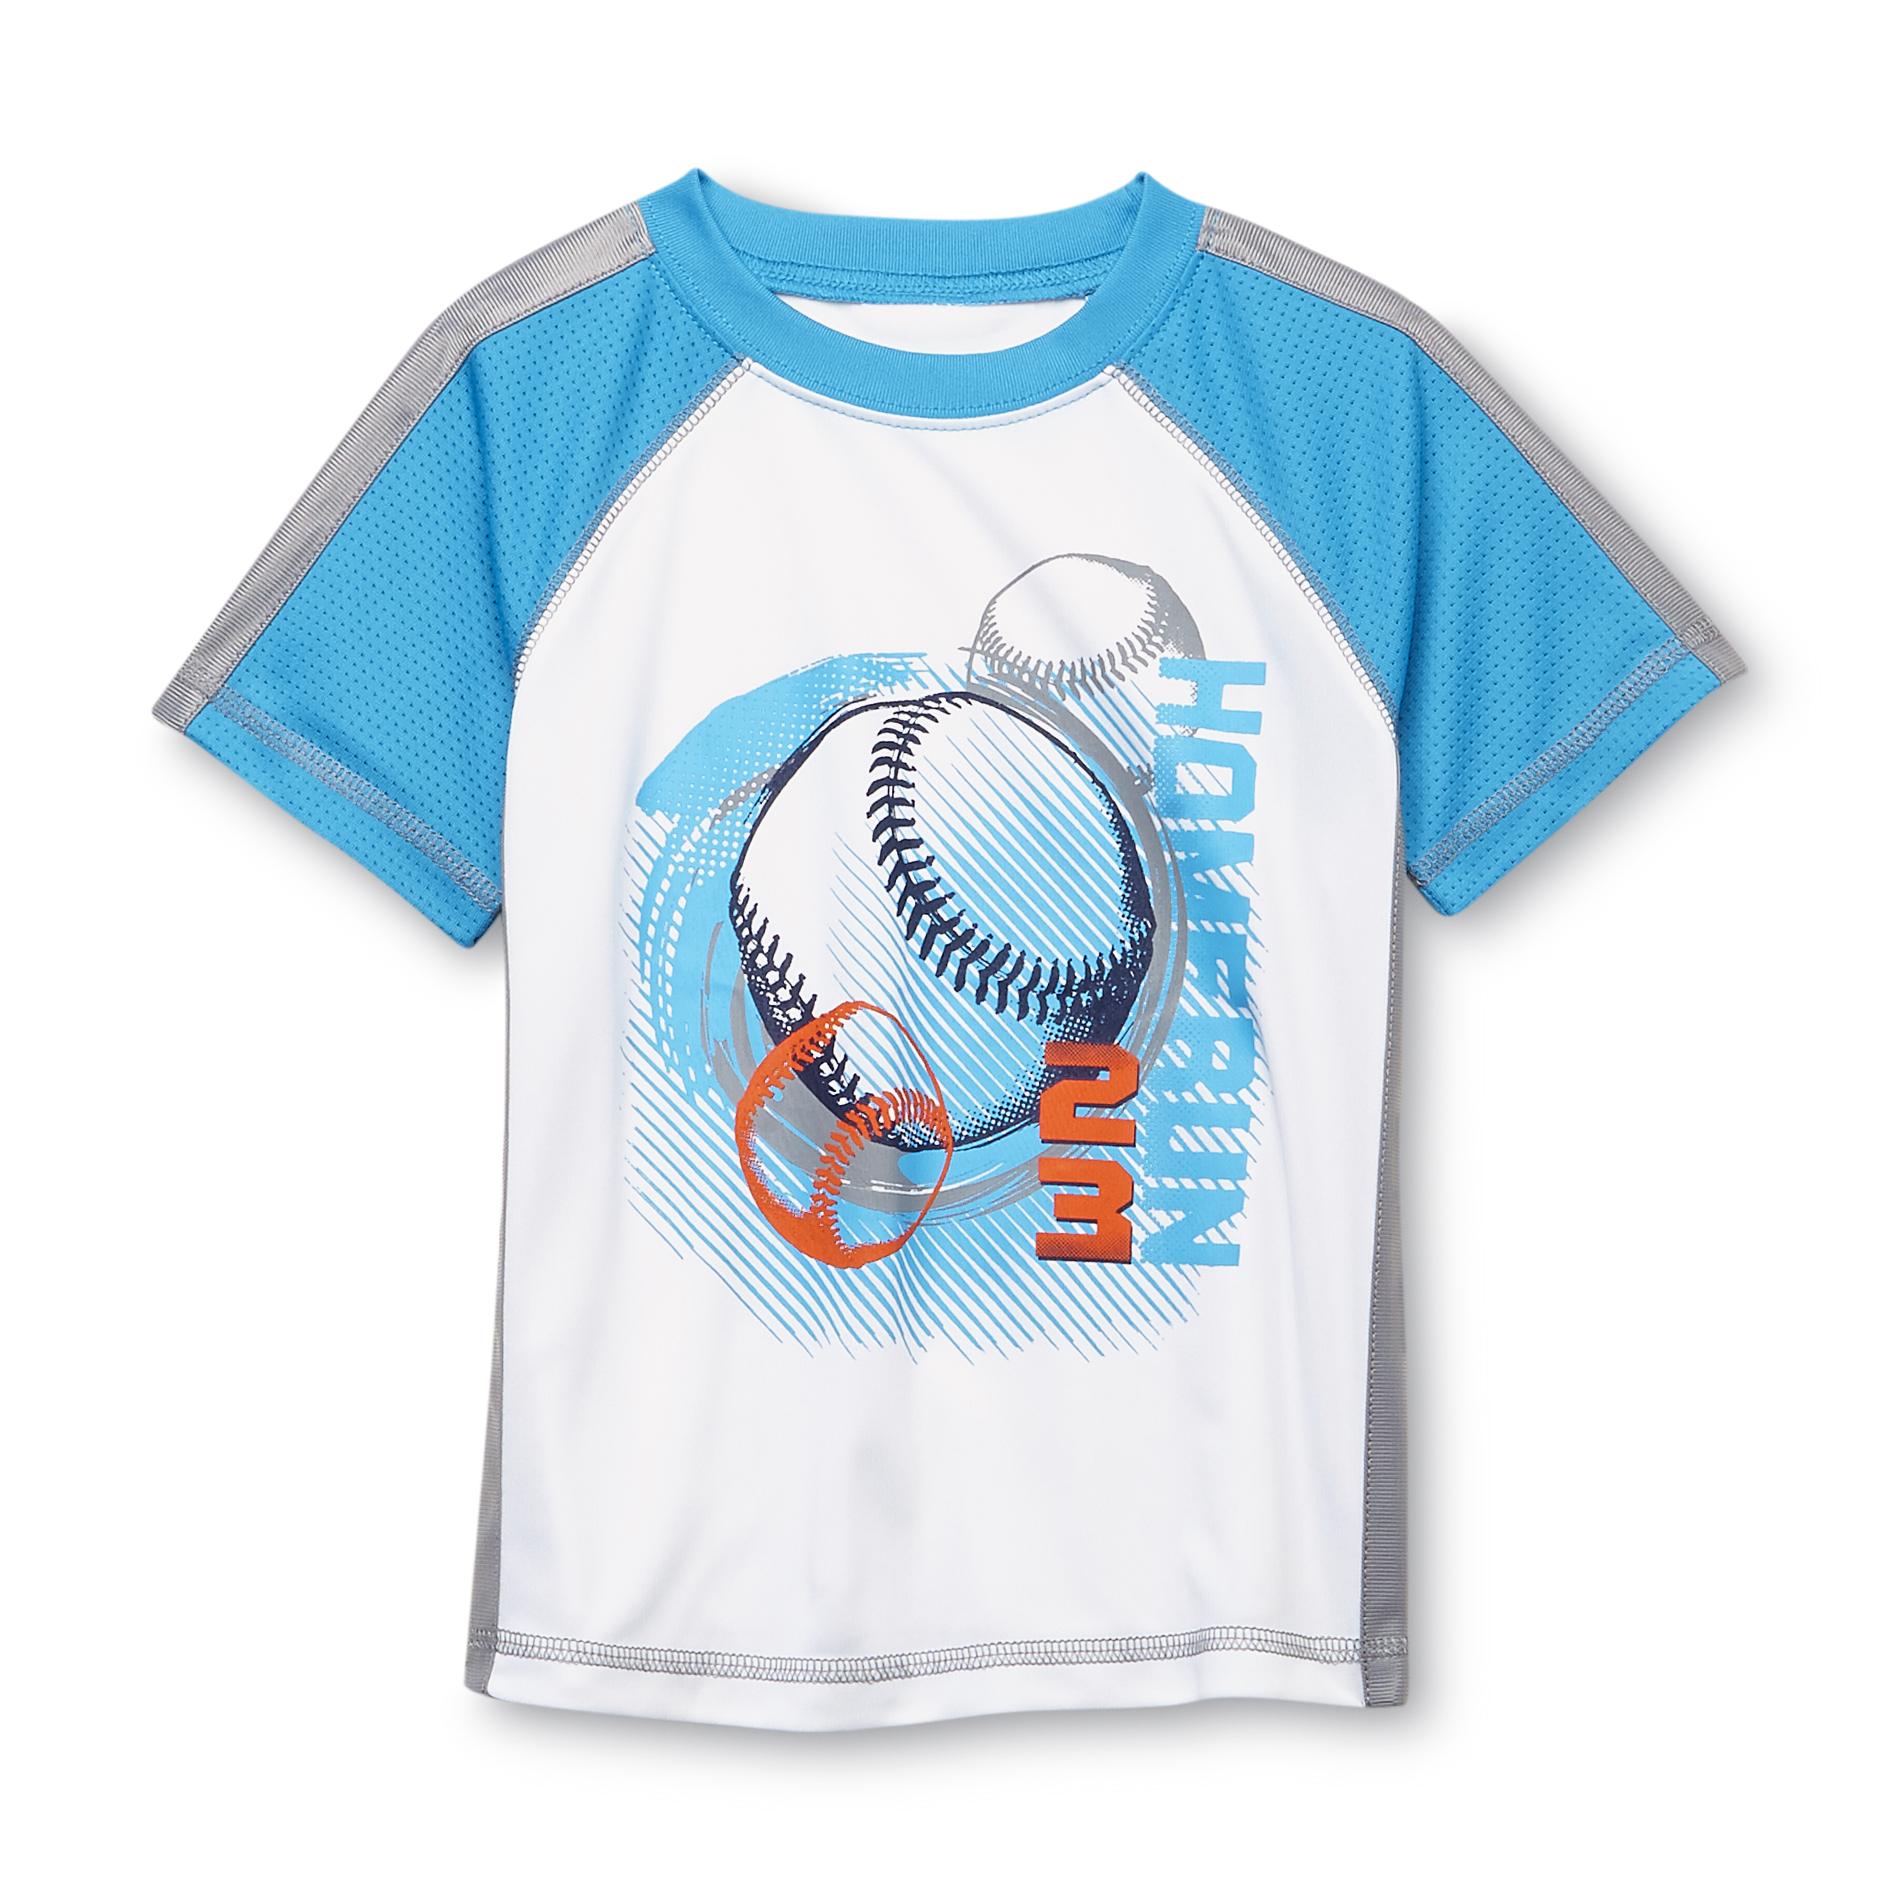 WonderKids Toddler Boy's Athletic T-Shirt - Baseball